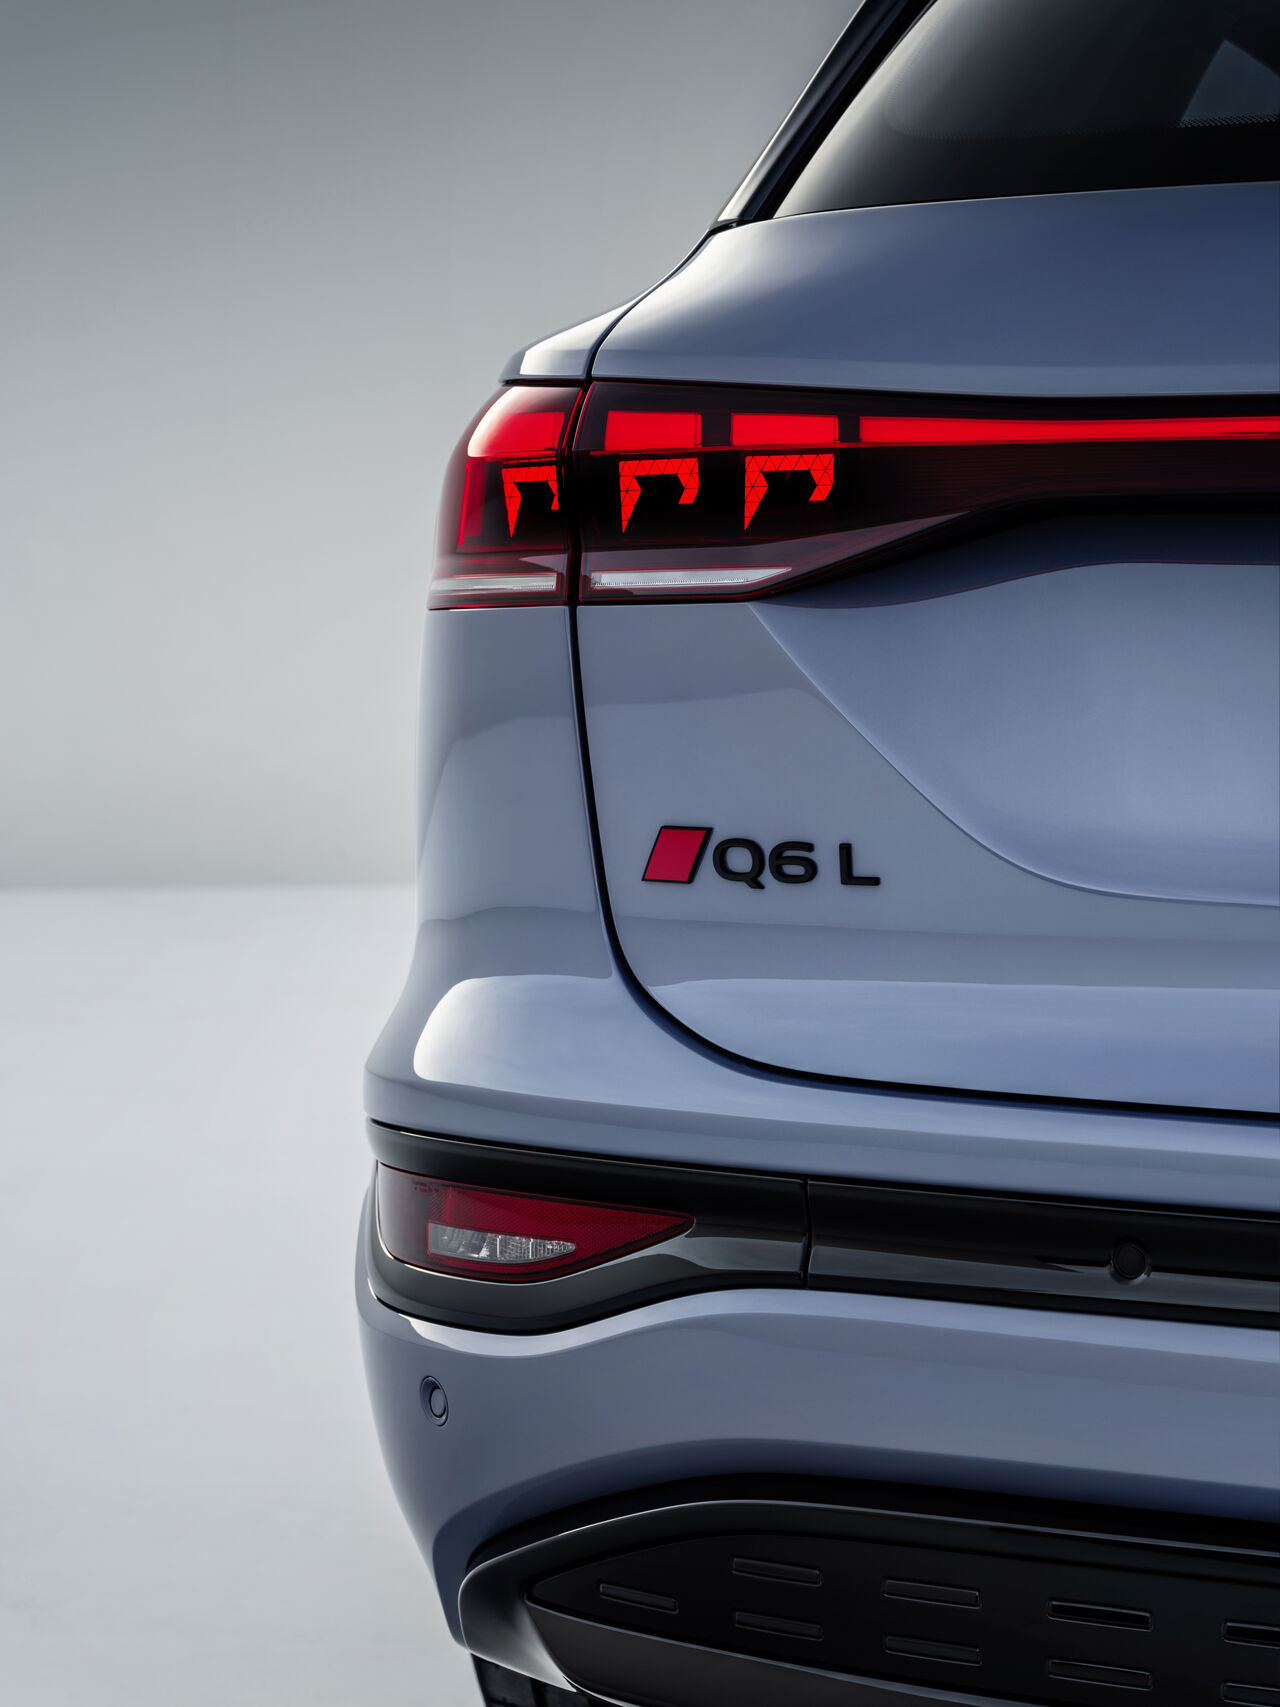 Audi Q6 L e-tron